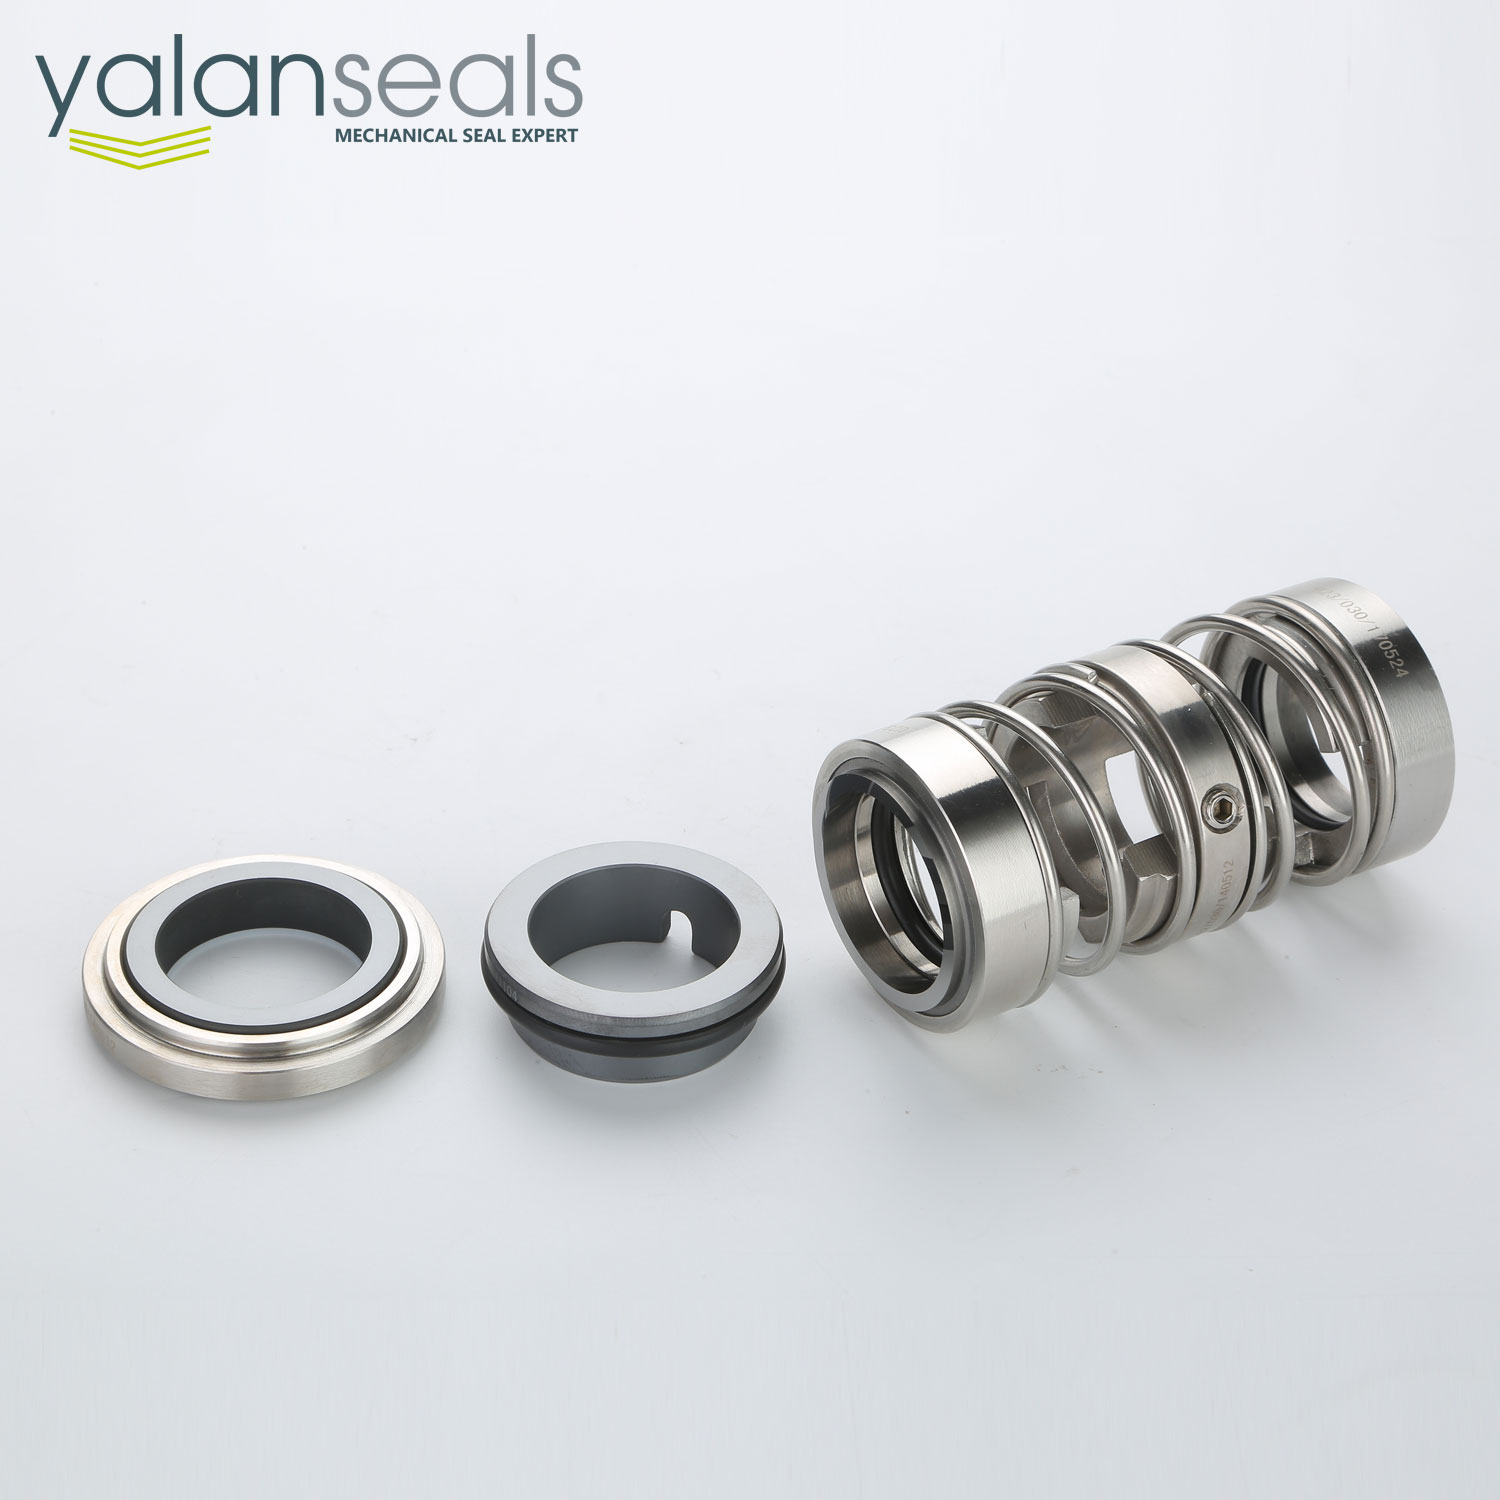 YALAN U208-N Single Spring Double Mechanical Seal for Food Biochemical Process Pumps